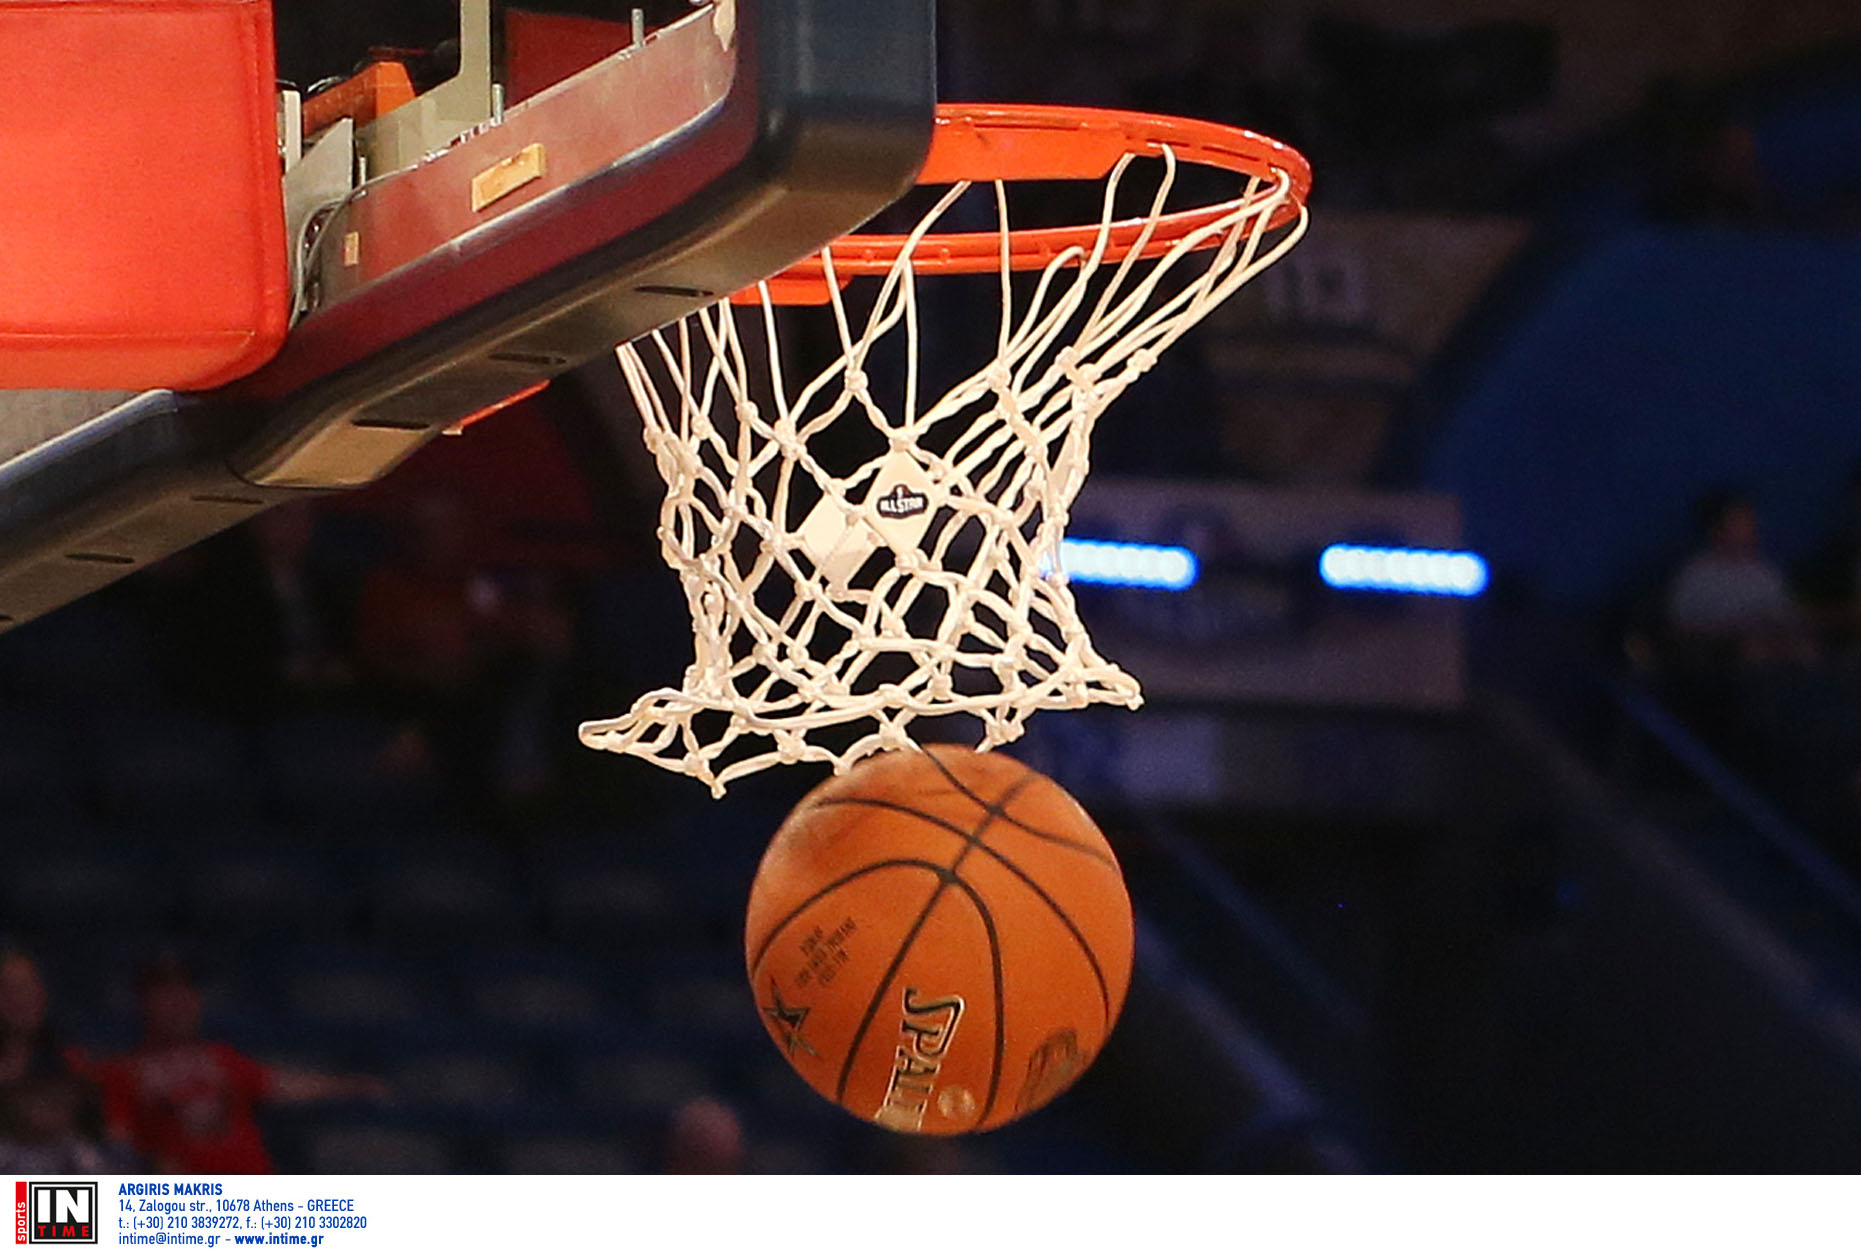 NBA: Ζημιές δισεκατομμυρίων ευρώ αν δεν ξεκινήσει η σεζόν – “Αστρονομικά” ποσά θα χάσουν οι παίκτες (pic)